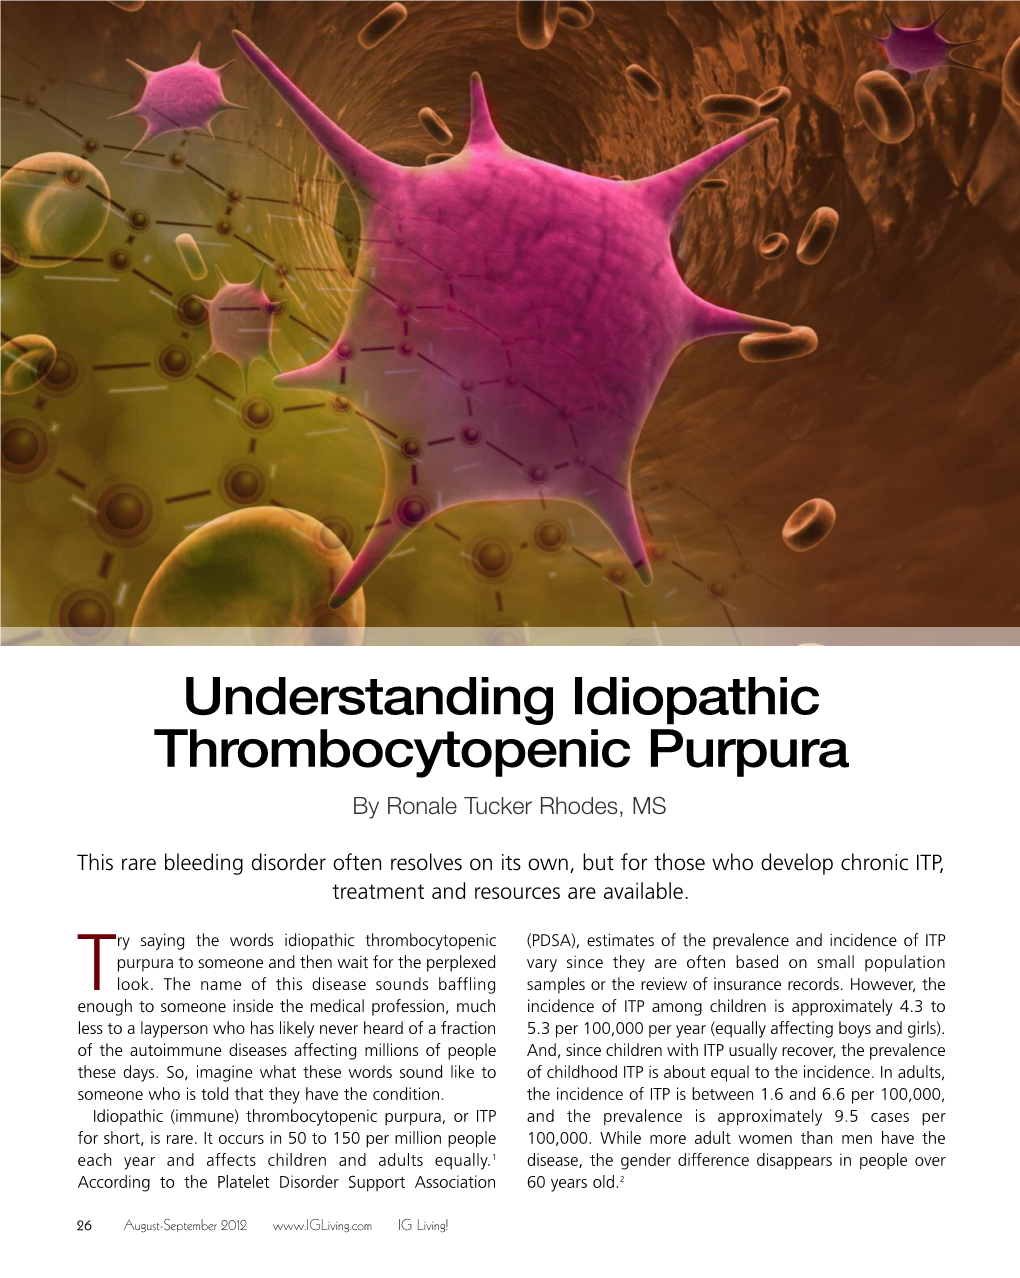 Understanding Idiopathic Thrombocytopenic Purpura by Ronale Tucker Rhodes, MS